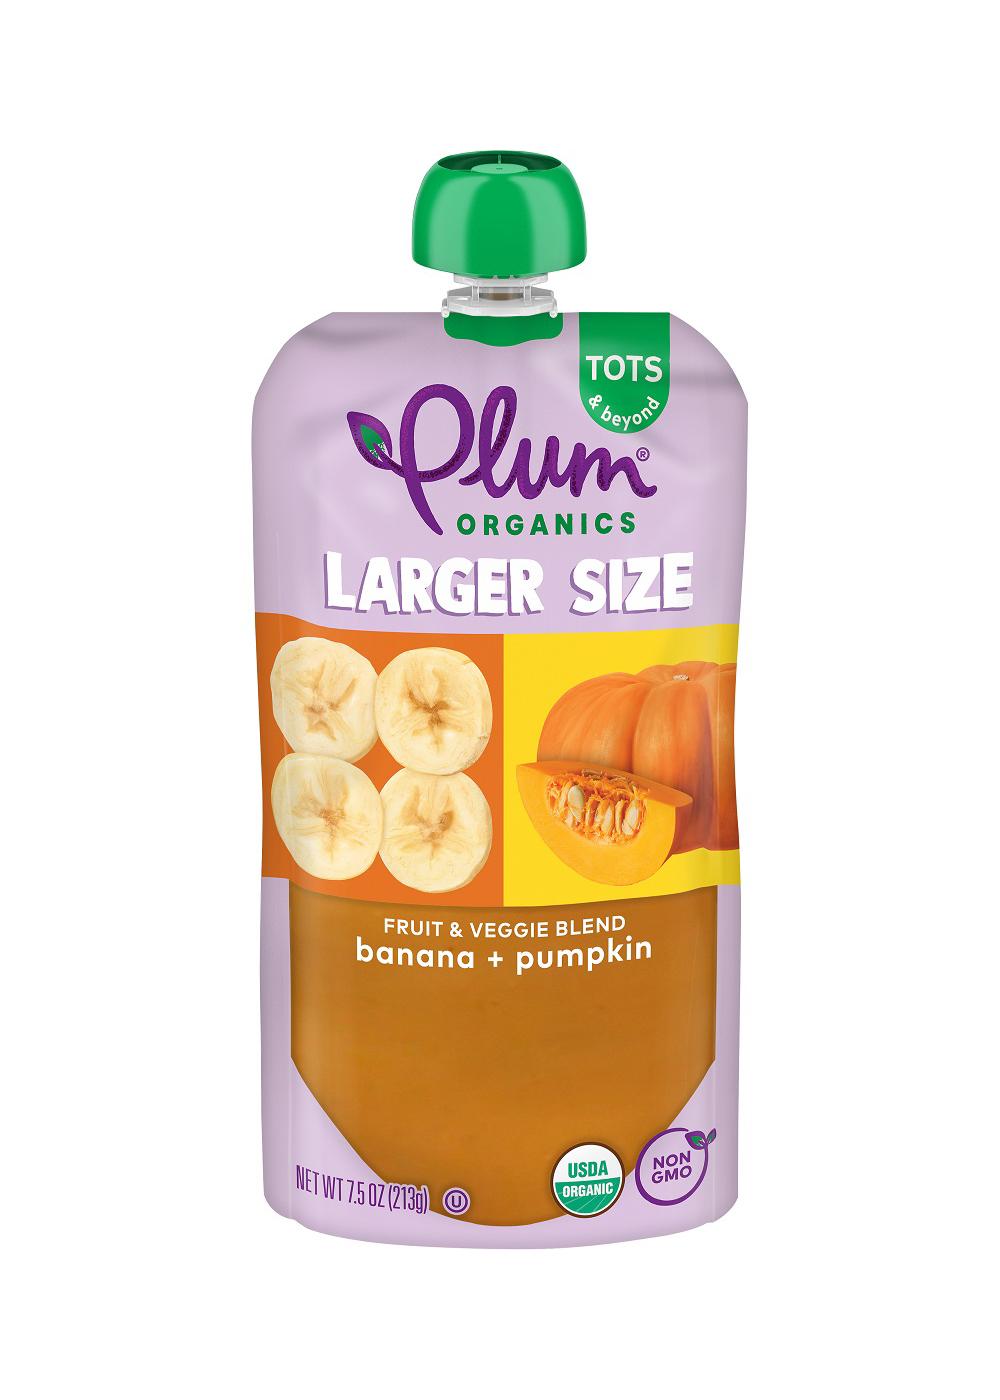 Plum Organics Larger Size Baby Food Pouch - Banana + Pumpkin; image 1 of 2